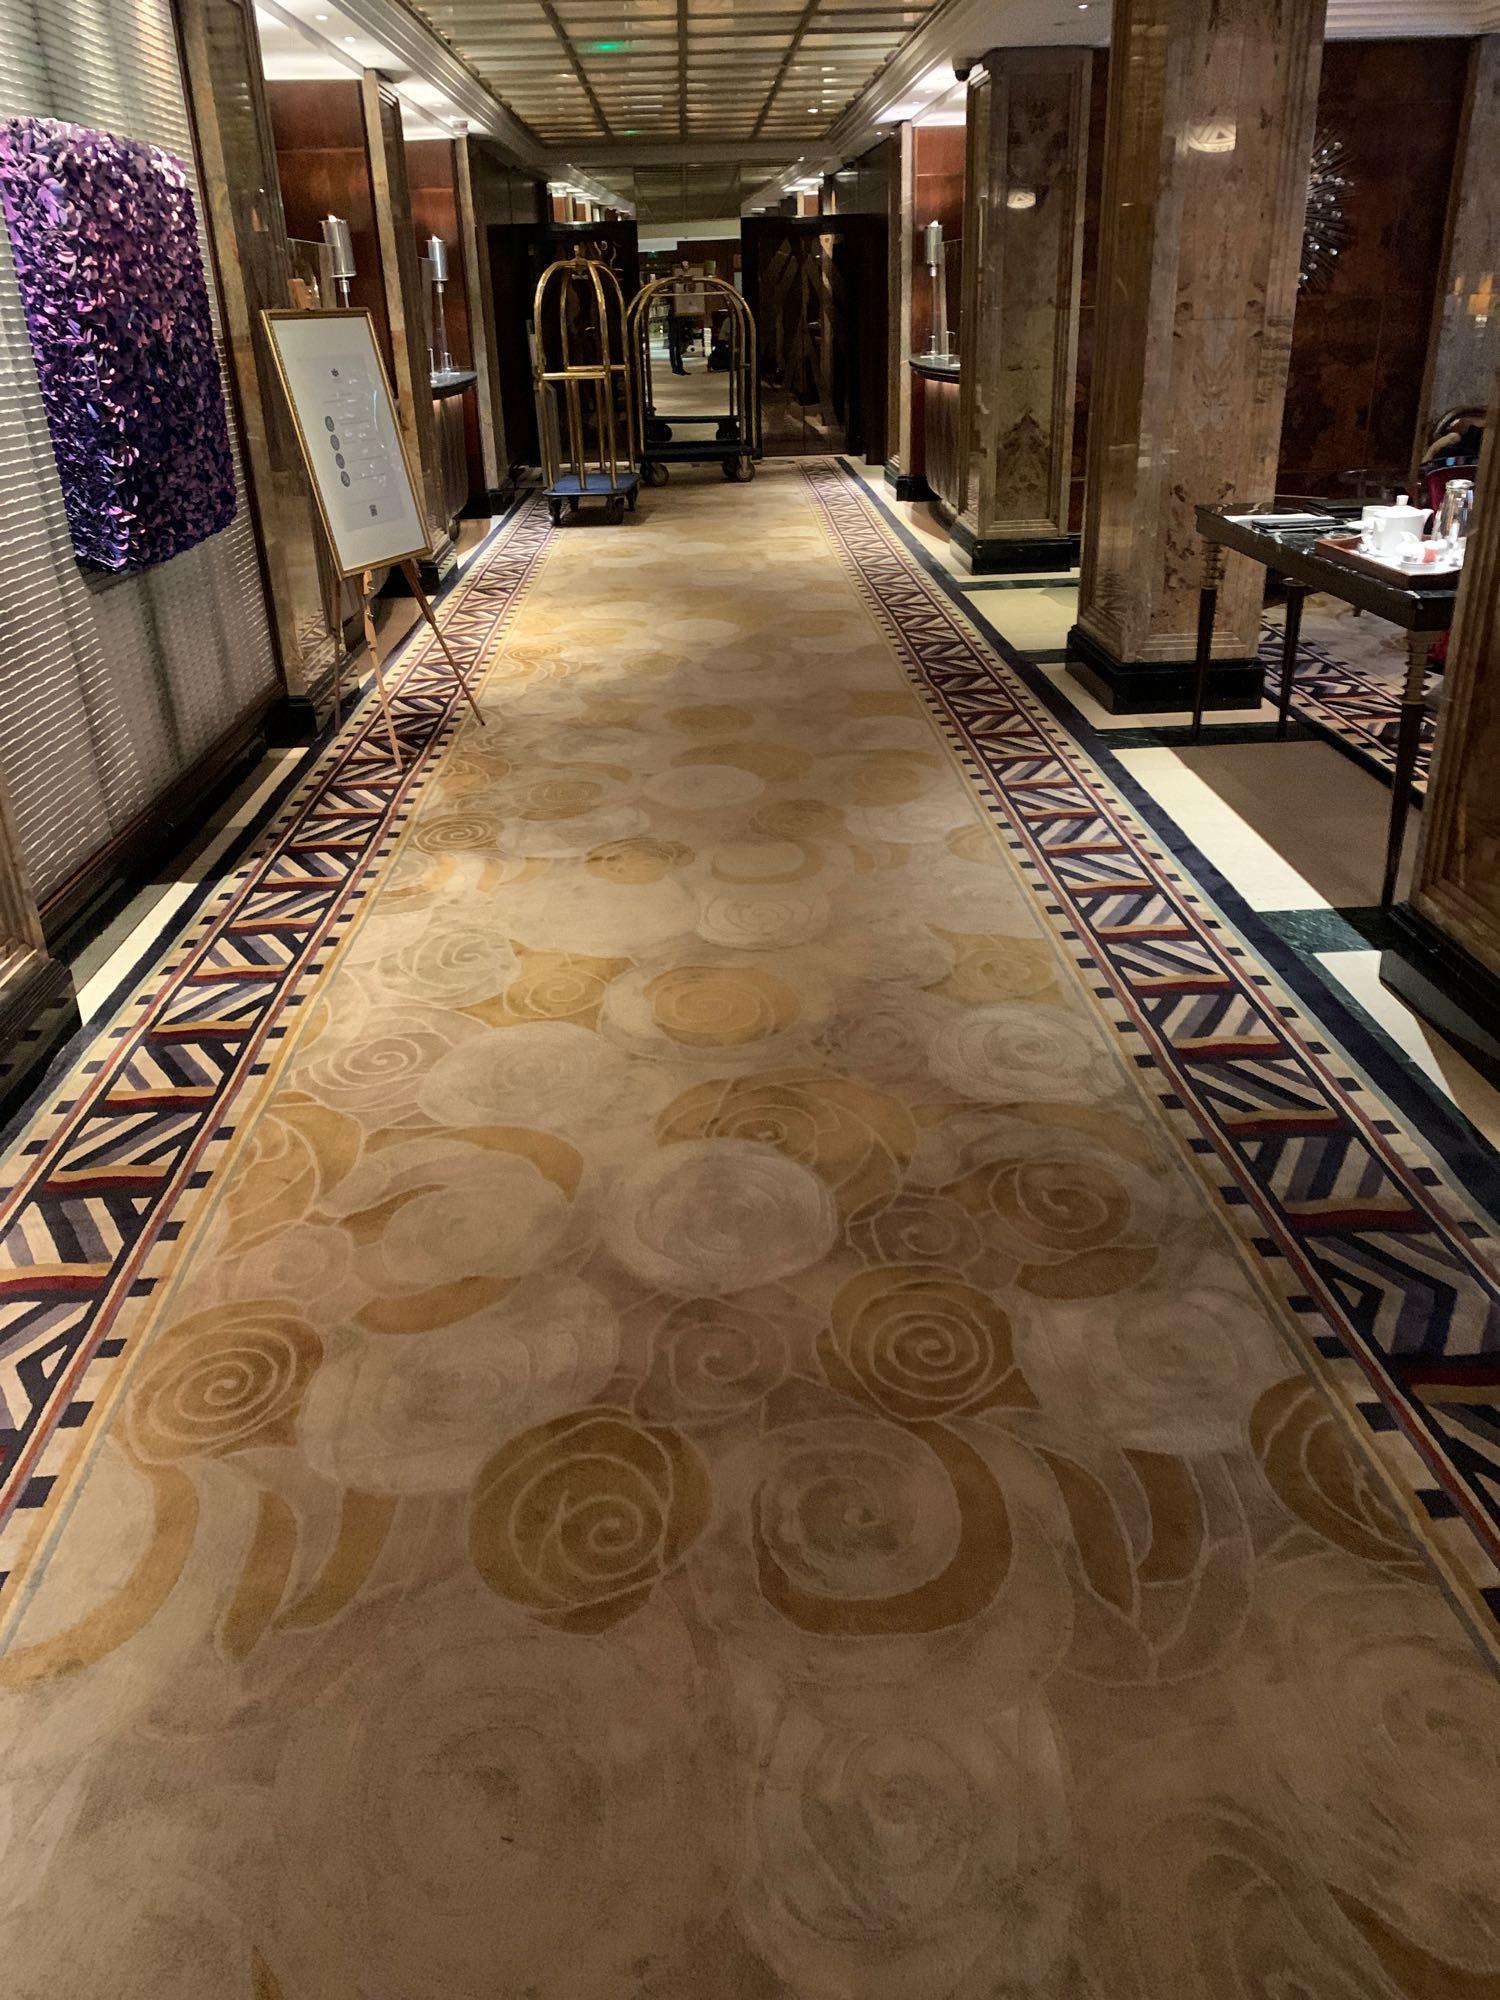 Bespoke Wool Carpet Approximately 40 Metersx 3 Meters Beige And Cream Field With Geometric Blue, - Image 3 of 6